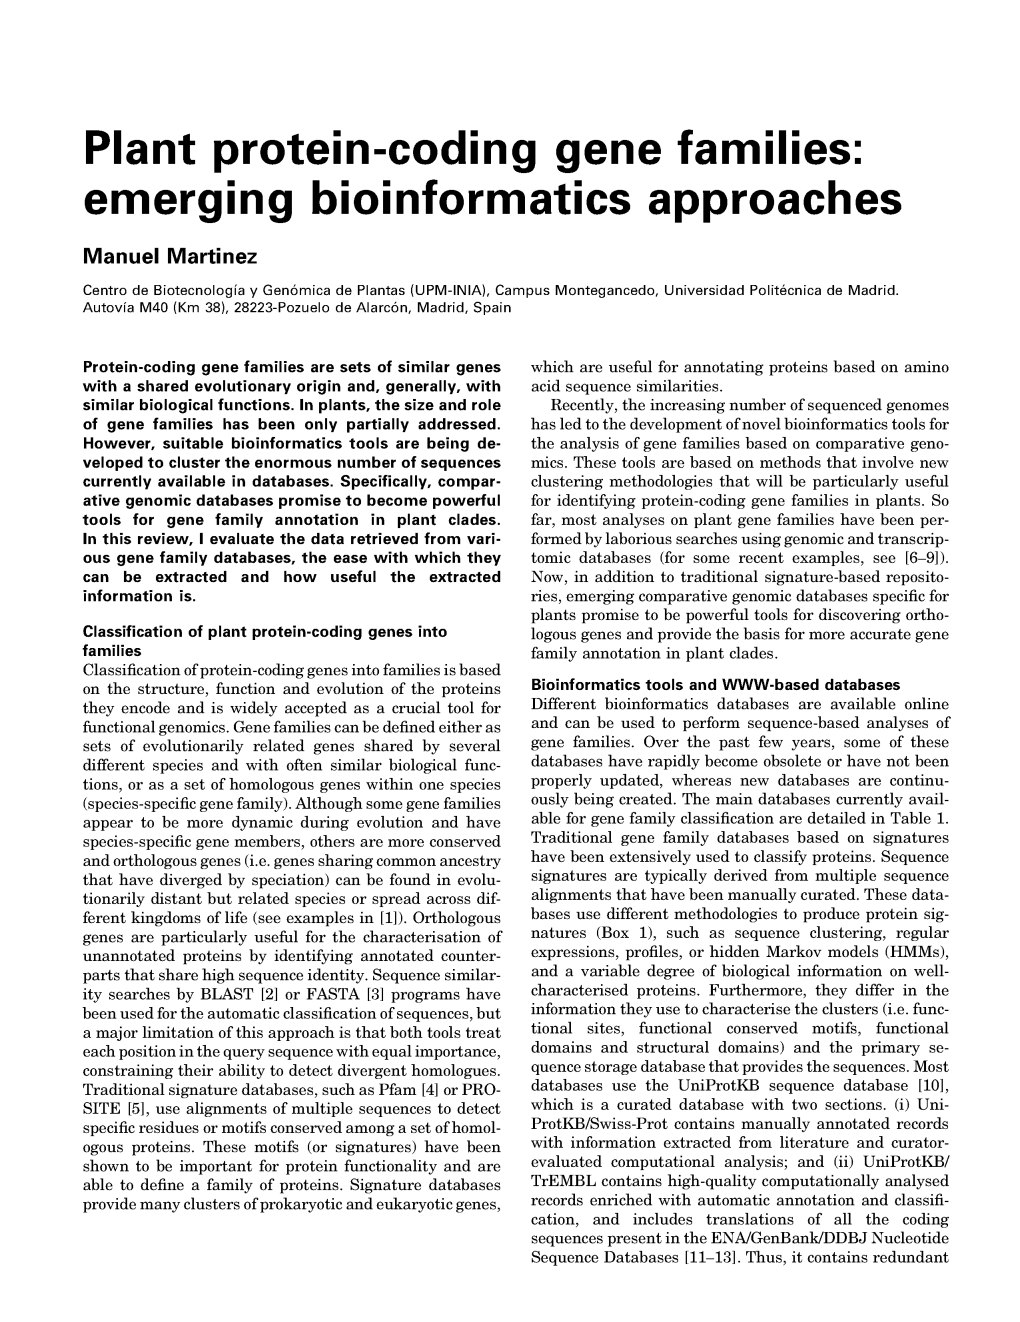 Plant Protein-Coding Gene Families: Emerging Bioinformatics Approaches Manuel Martinez